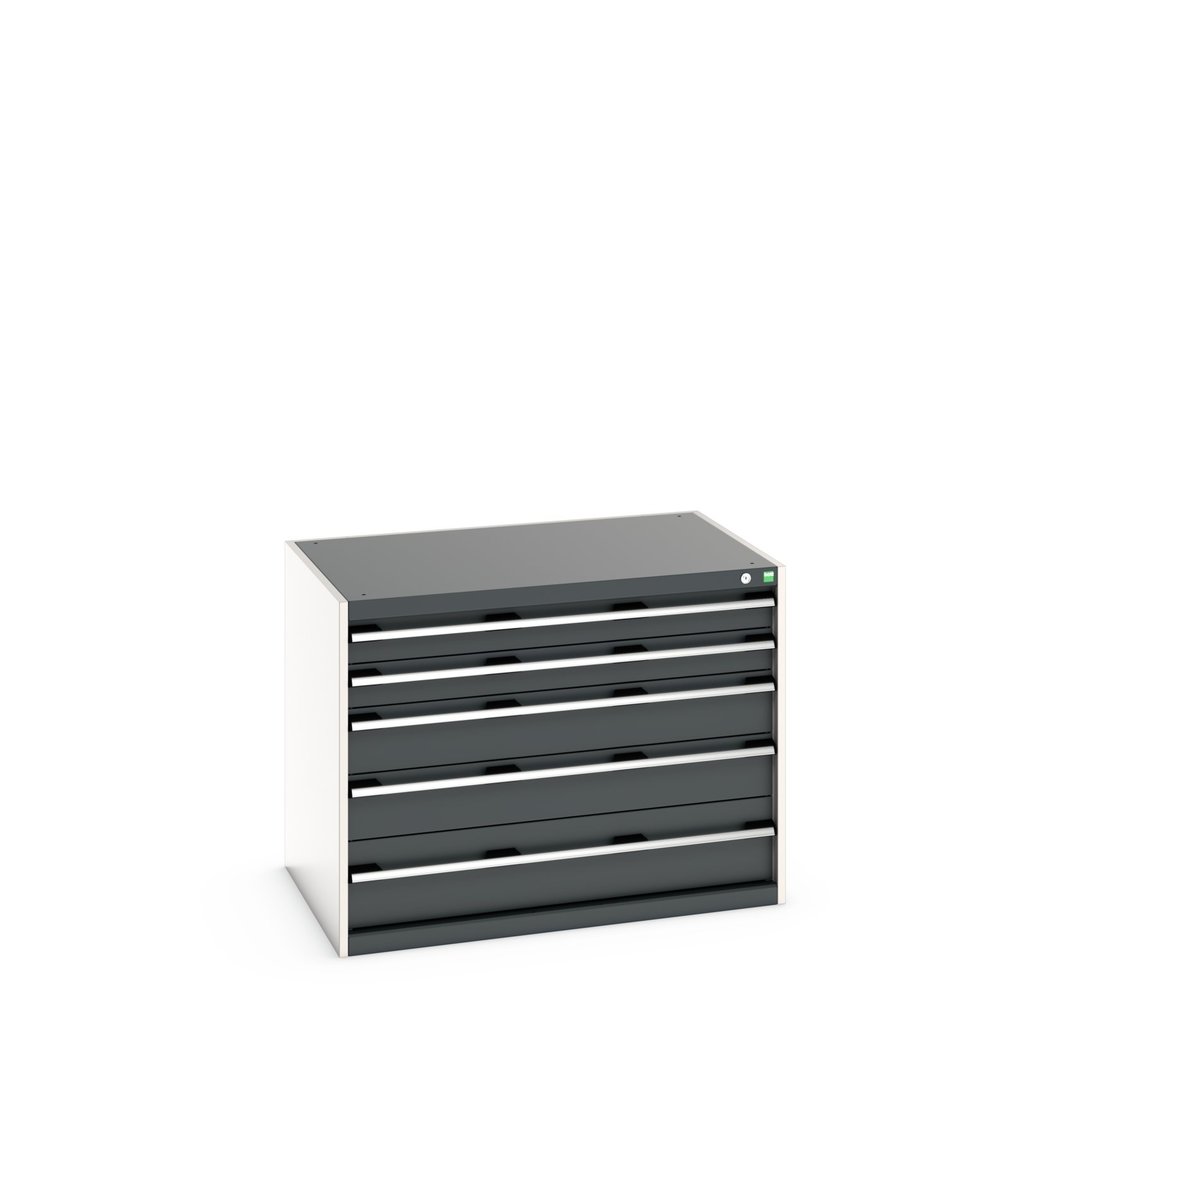 40029010. - cubio drawer cabinet